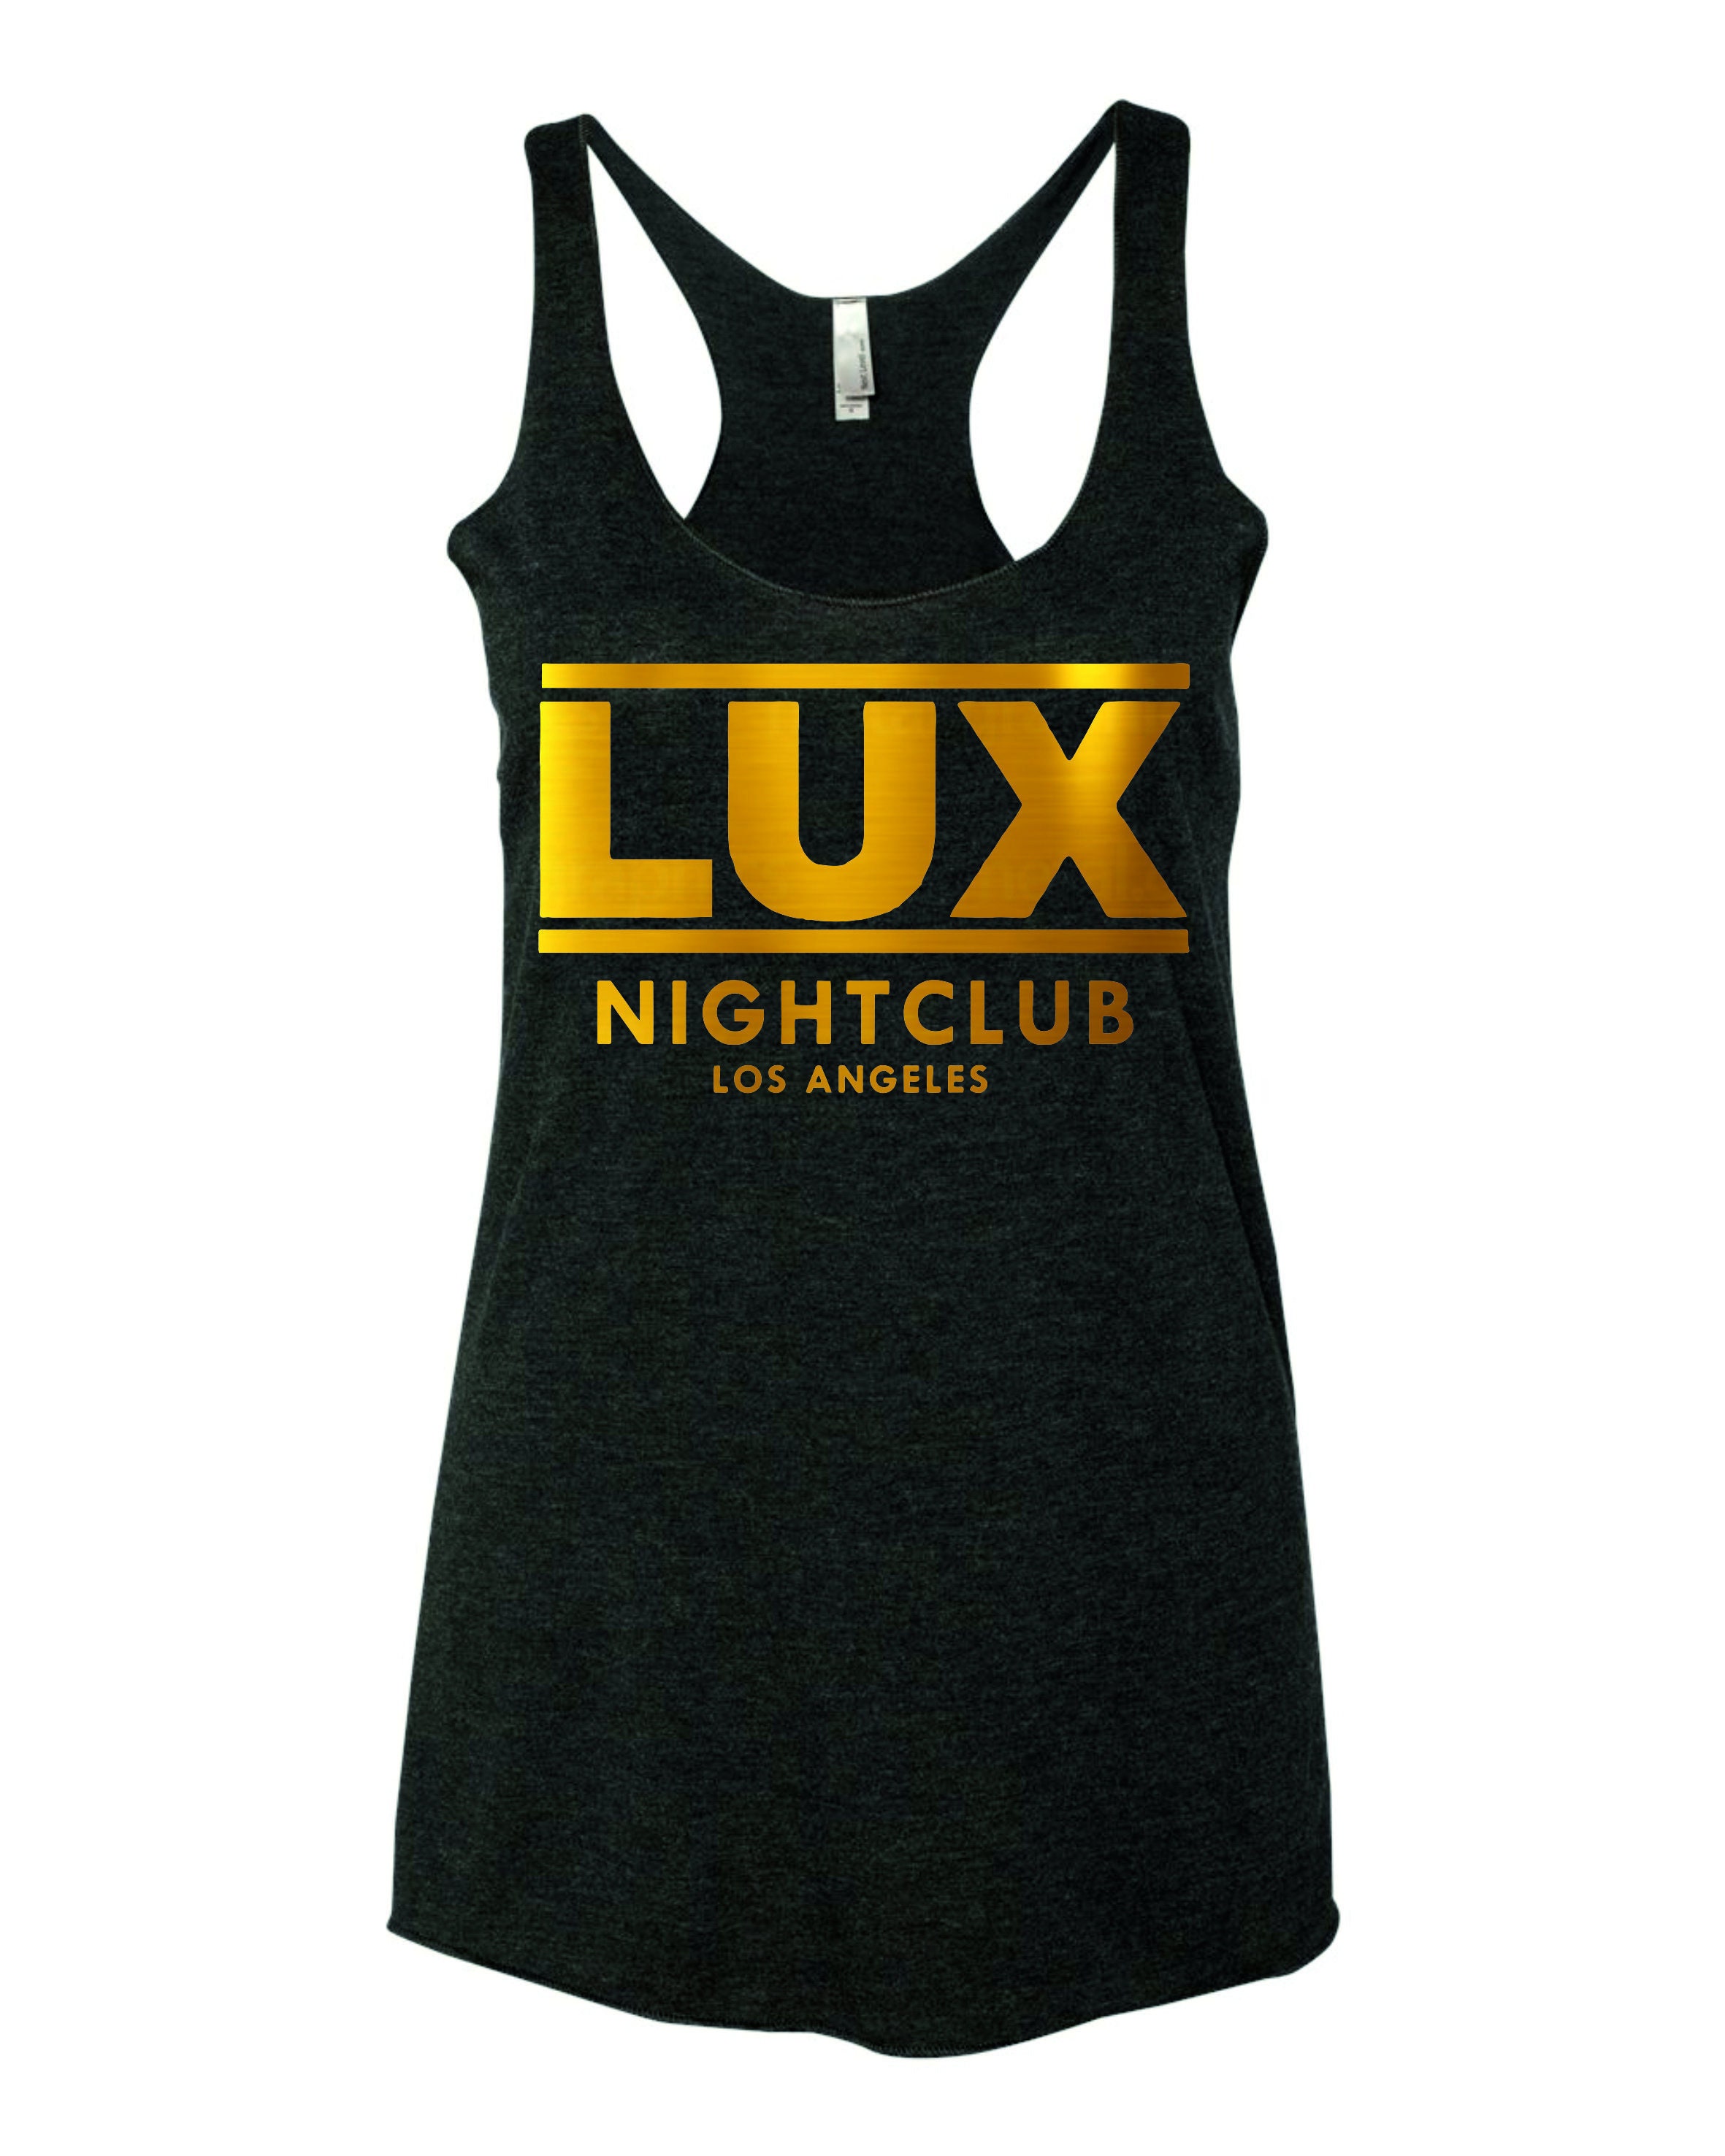 LUX Nightclub Camiseta De Las Mujeres Negro/Oro - Etsy